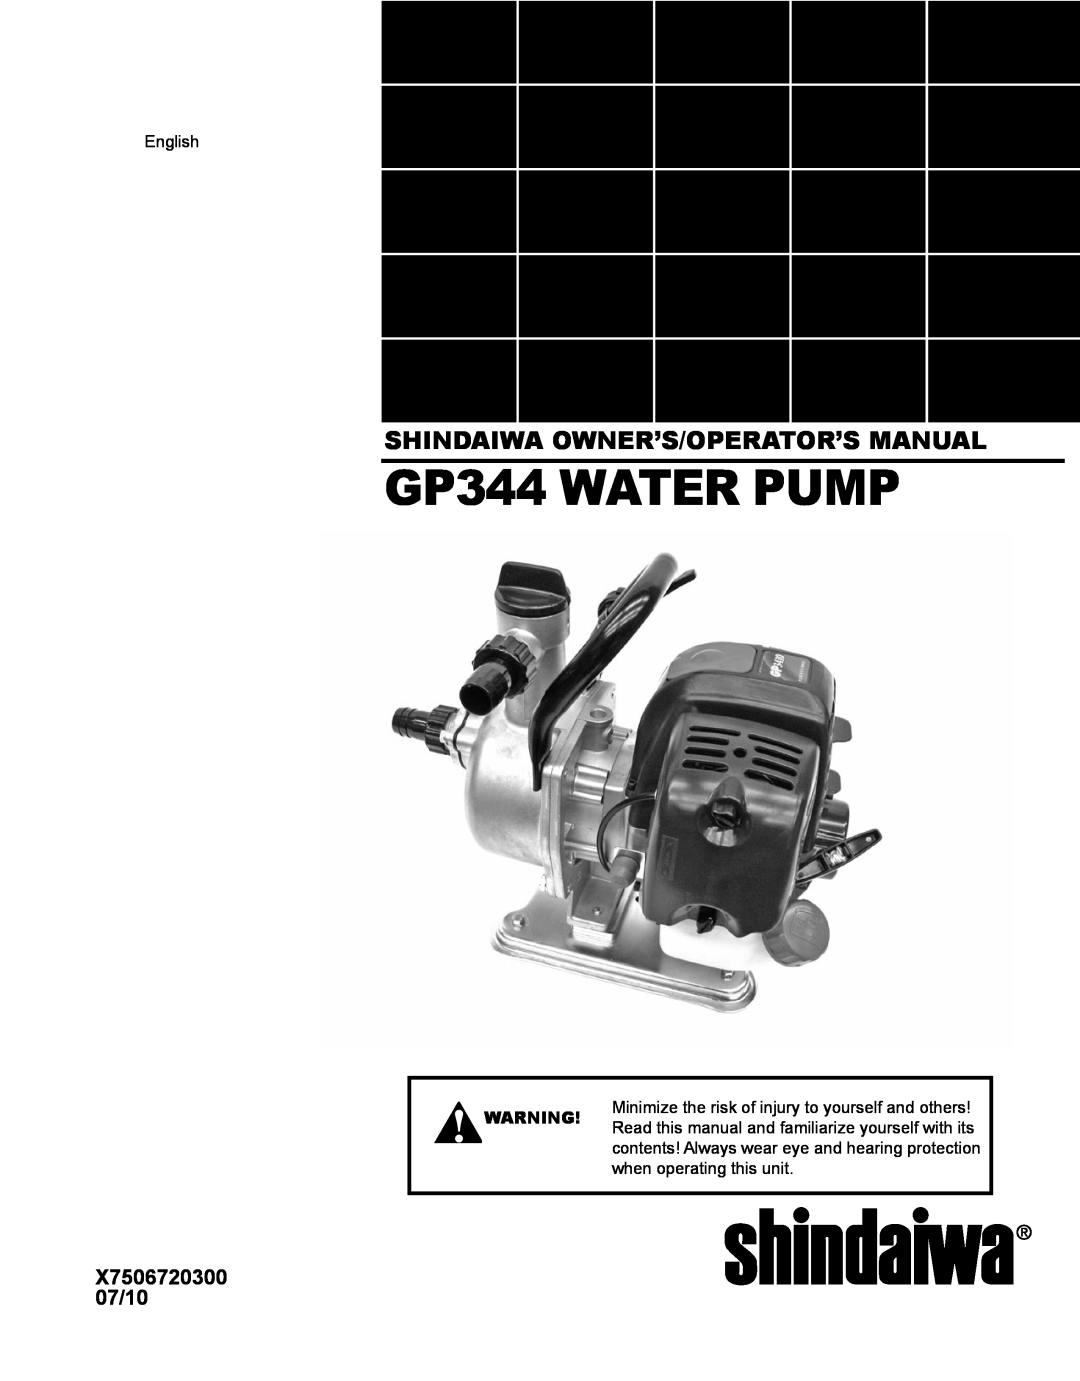 Shindaiwa manual X7506720300 07/10, GP344 WATER PUMP, Shindaiwa OWNER’S/OPERATOR’S MANUAL 